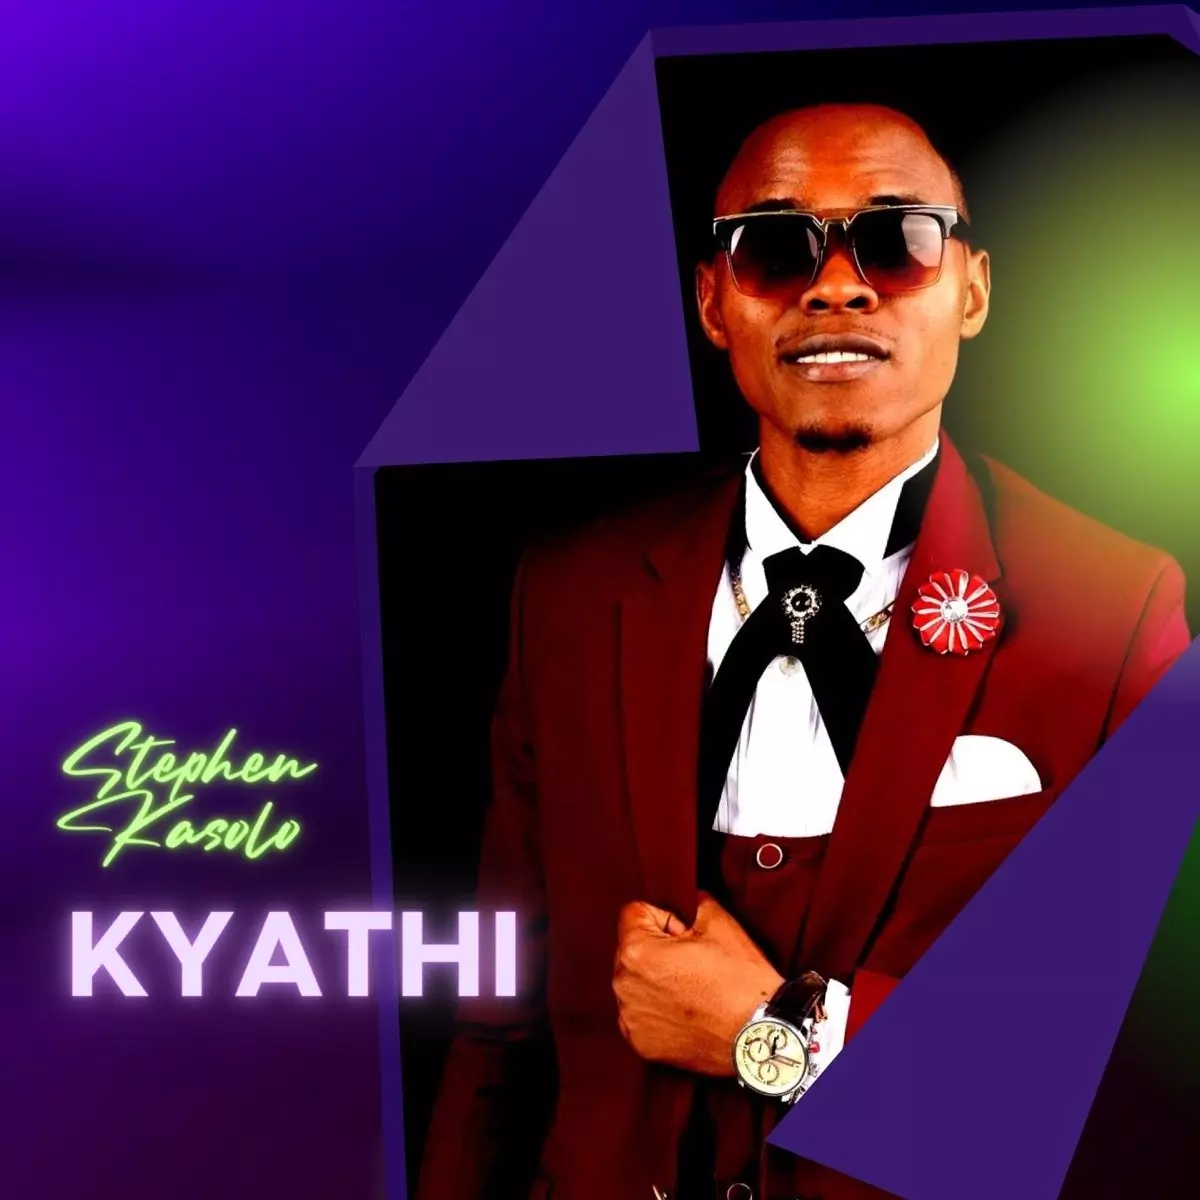 Kyathi - Single by Stephen Kasolo on Apple Music